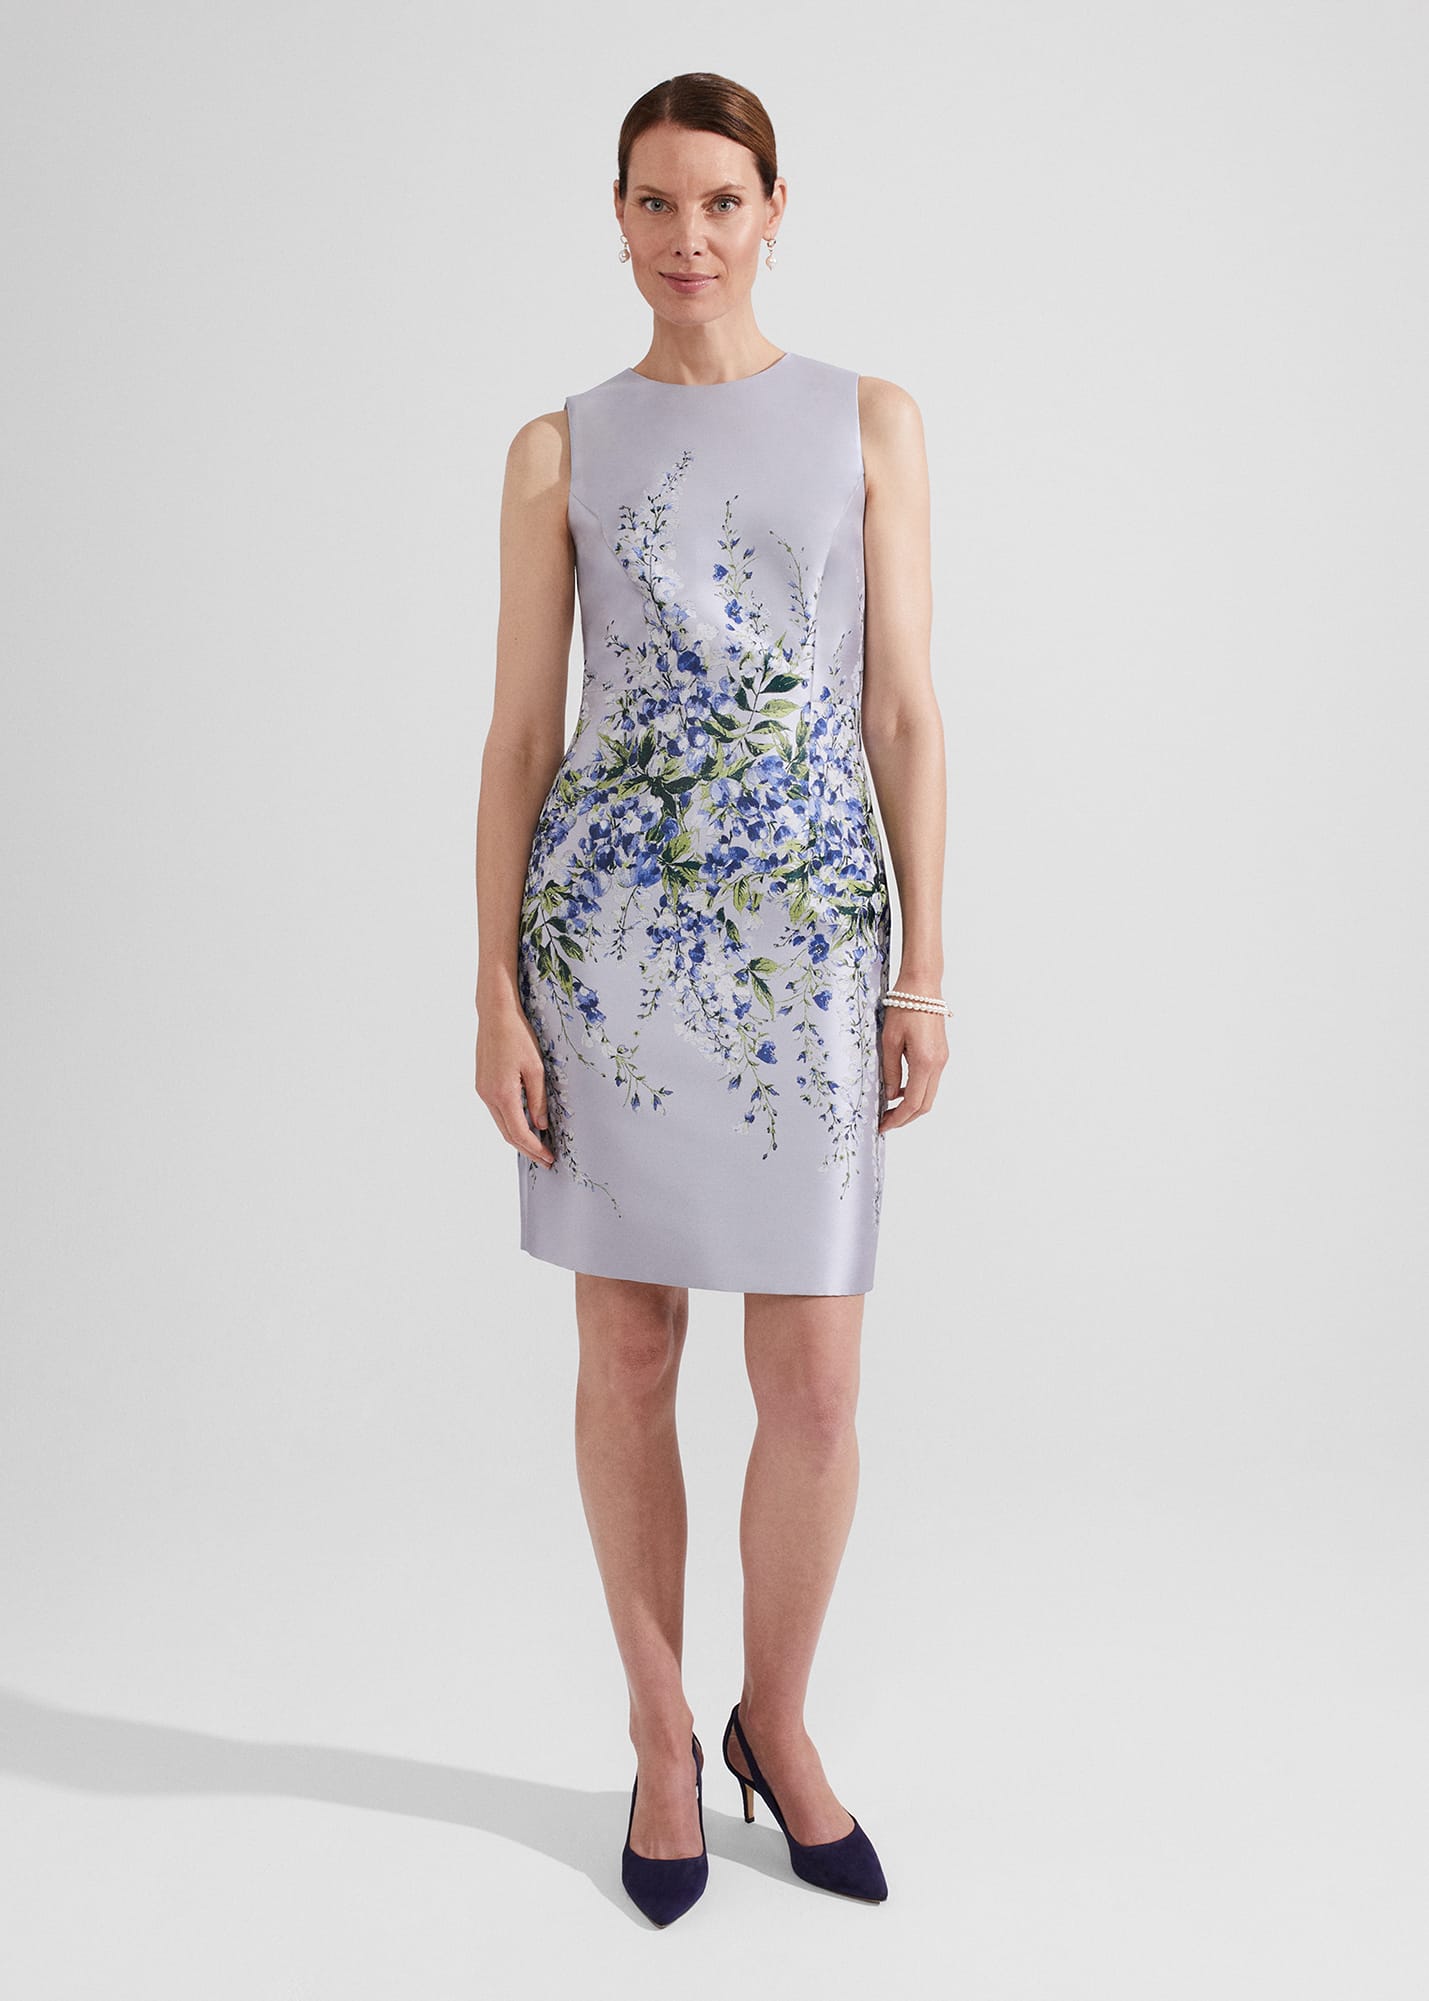 Hobbs Women's Sofia Jacquard Dress - Pale Blue Multi